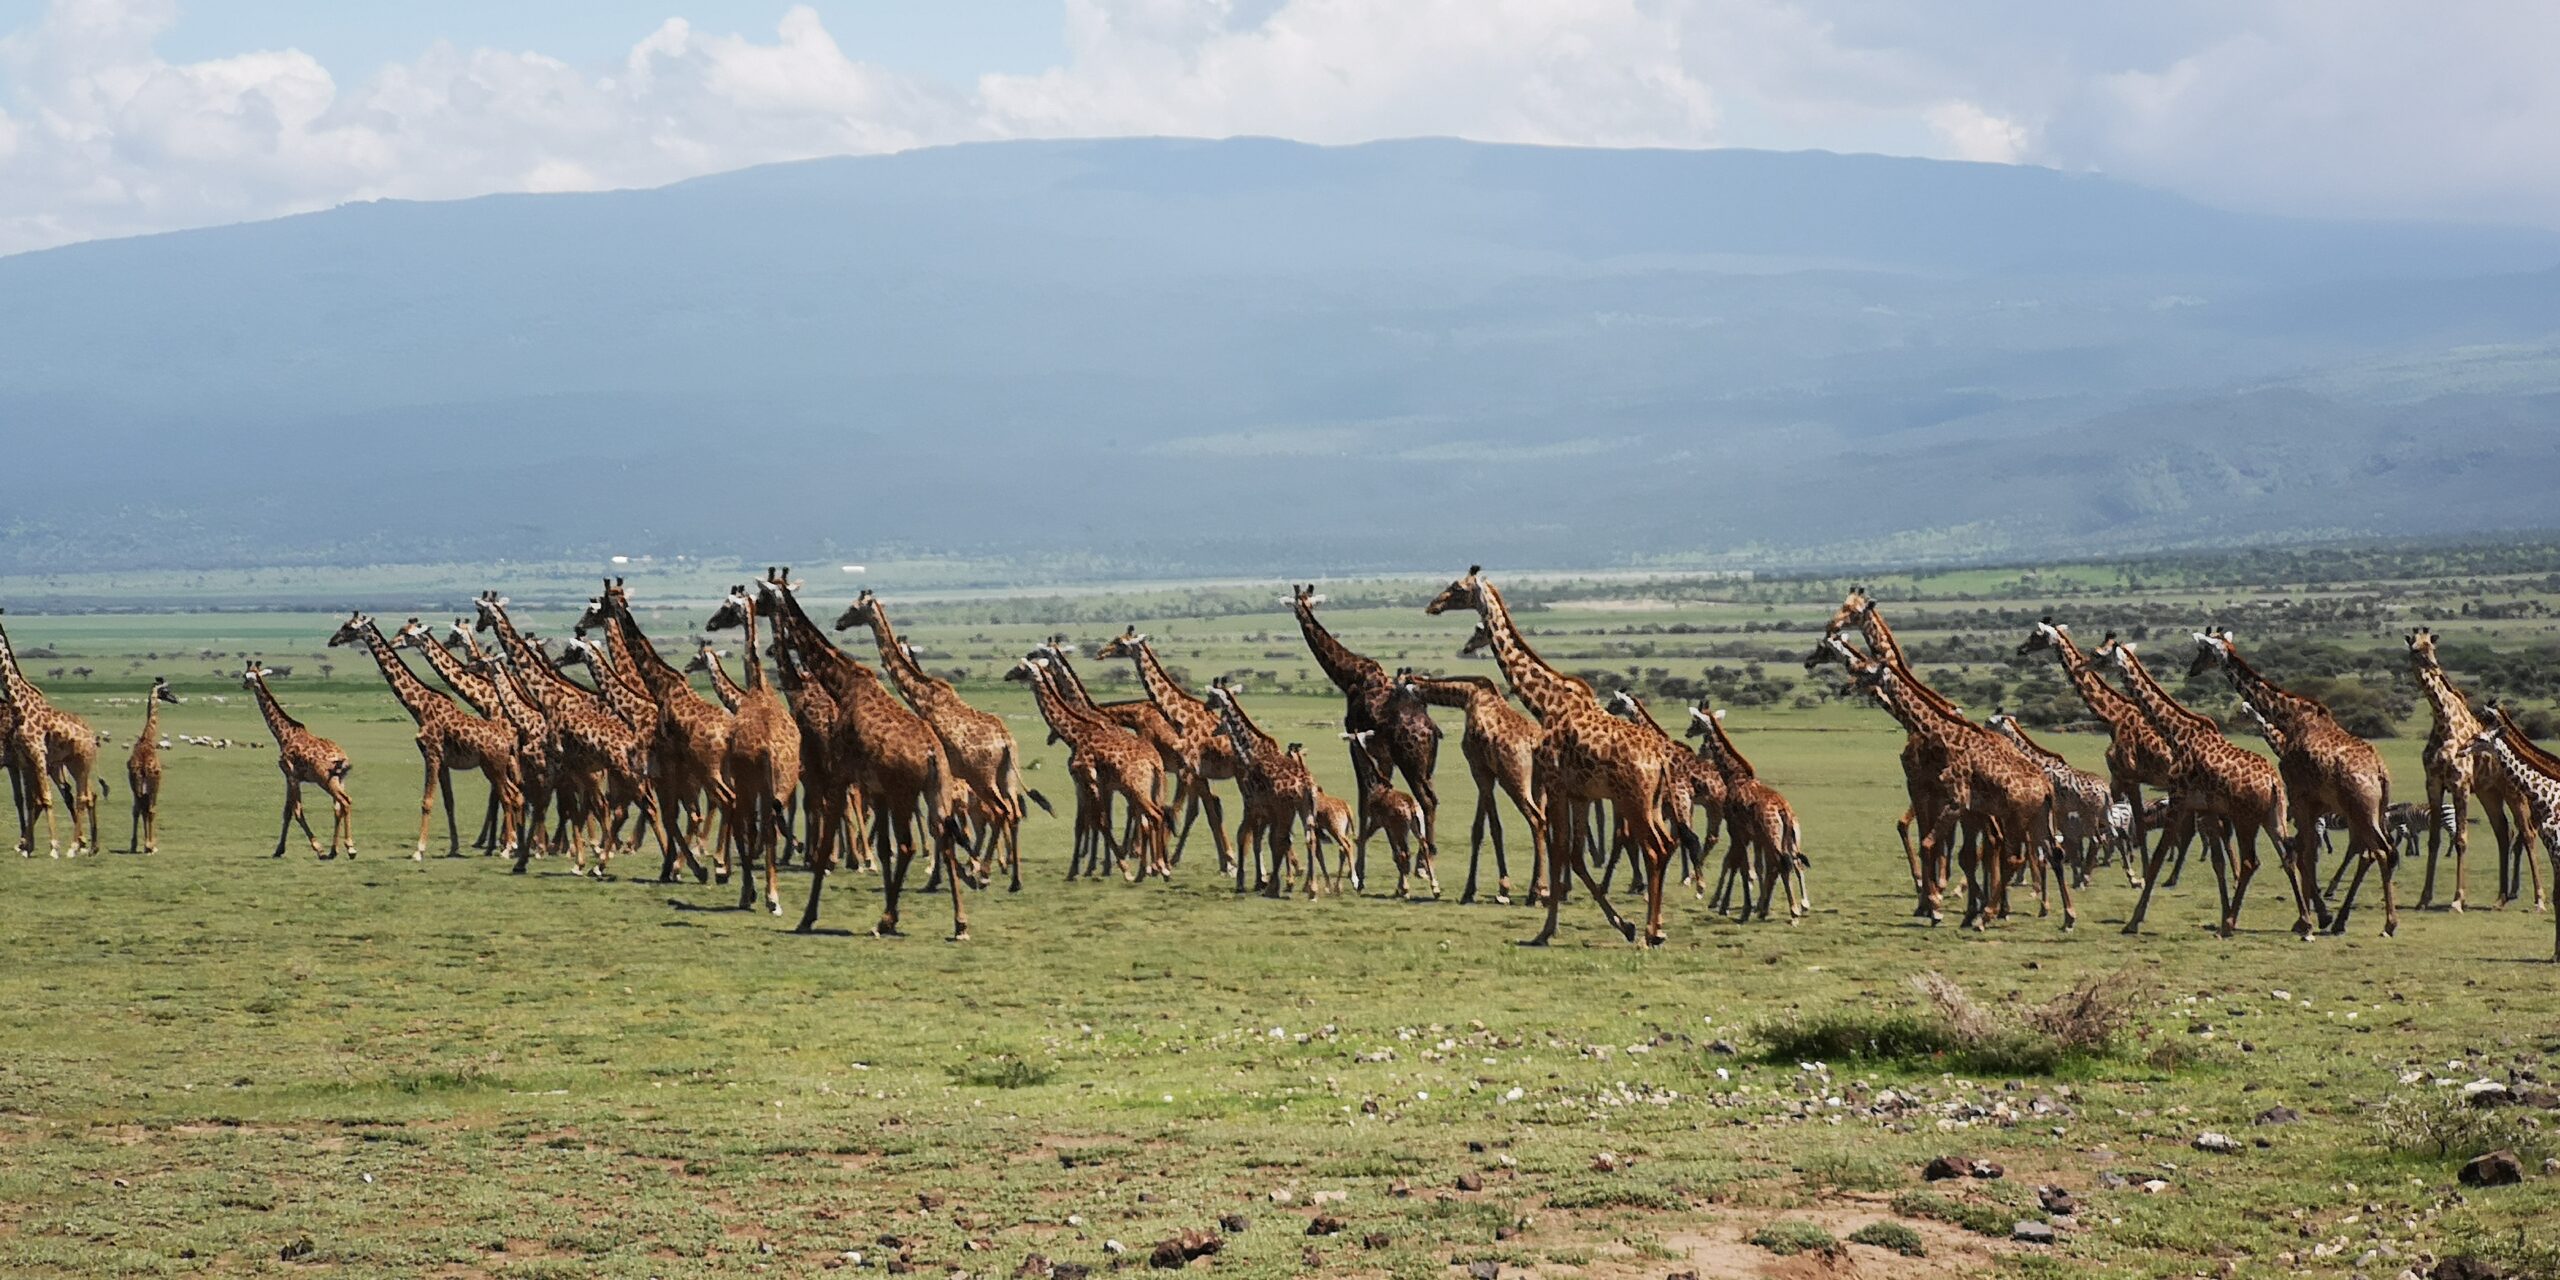 Giraffes in Ngorongoro Conservation Area during a safari with Caracal & Safaris in Tanzania